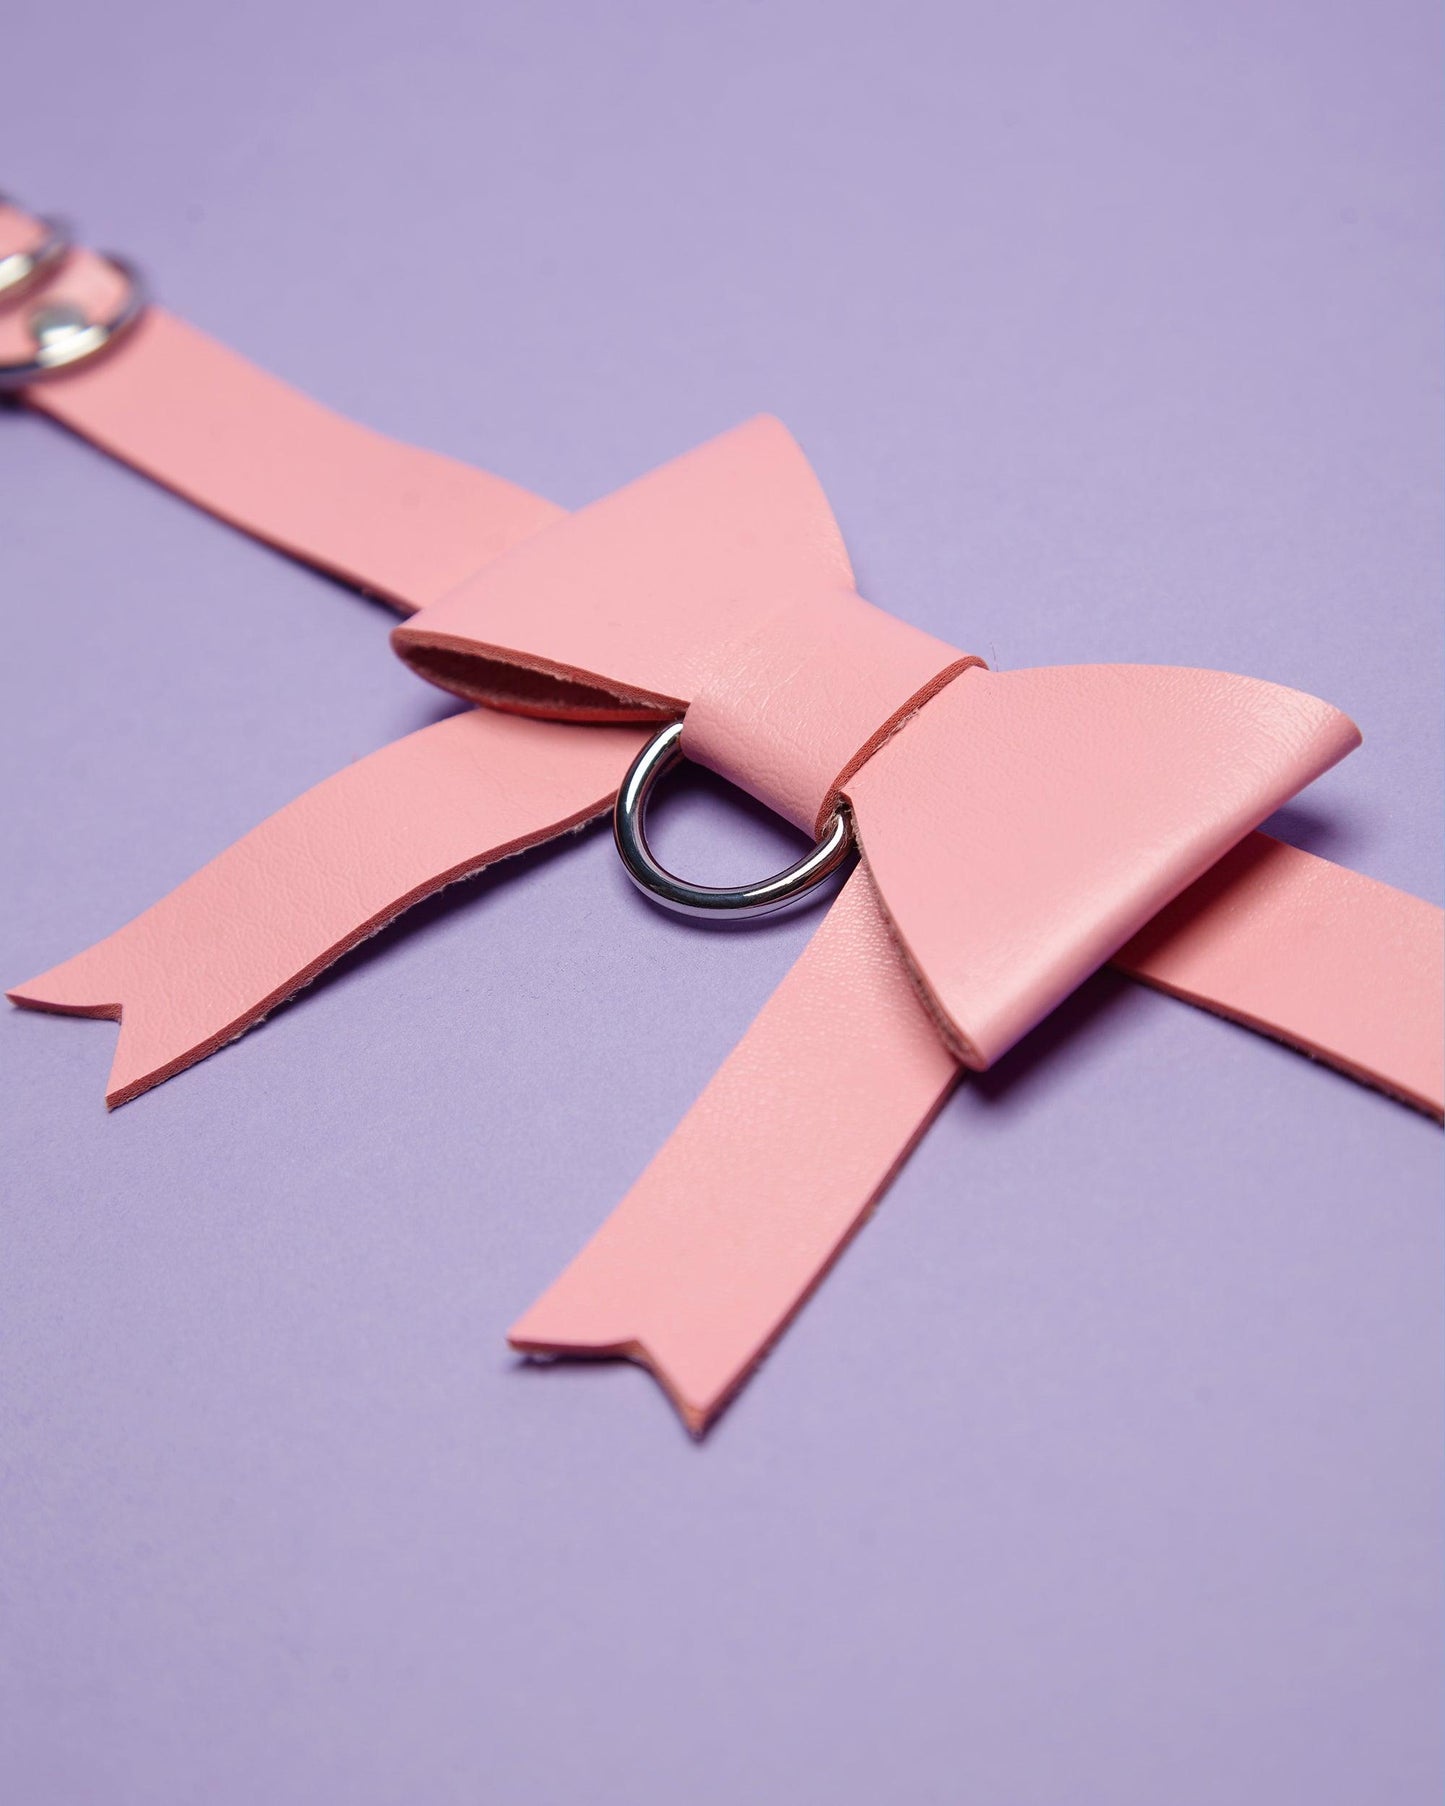 Pink bow - bicep band